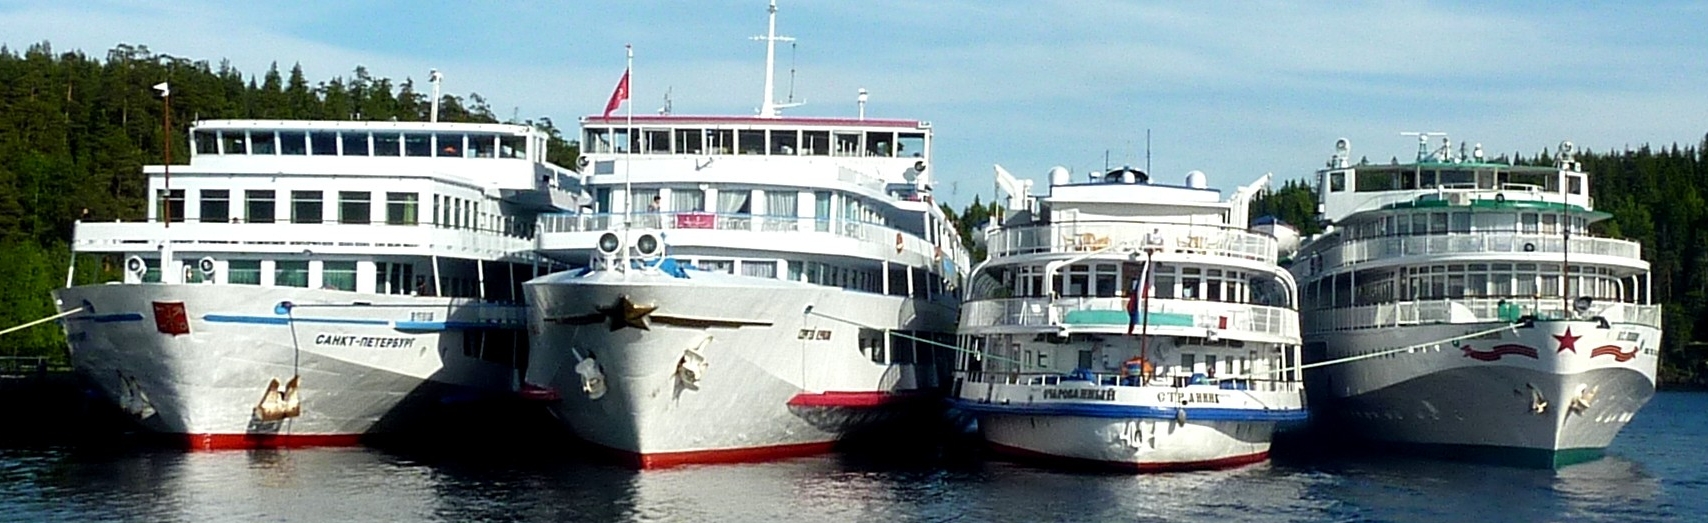 Large ships for visitors